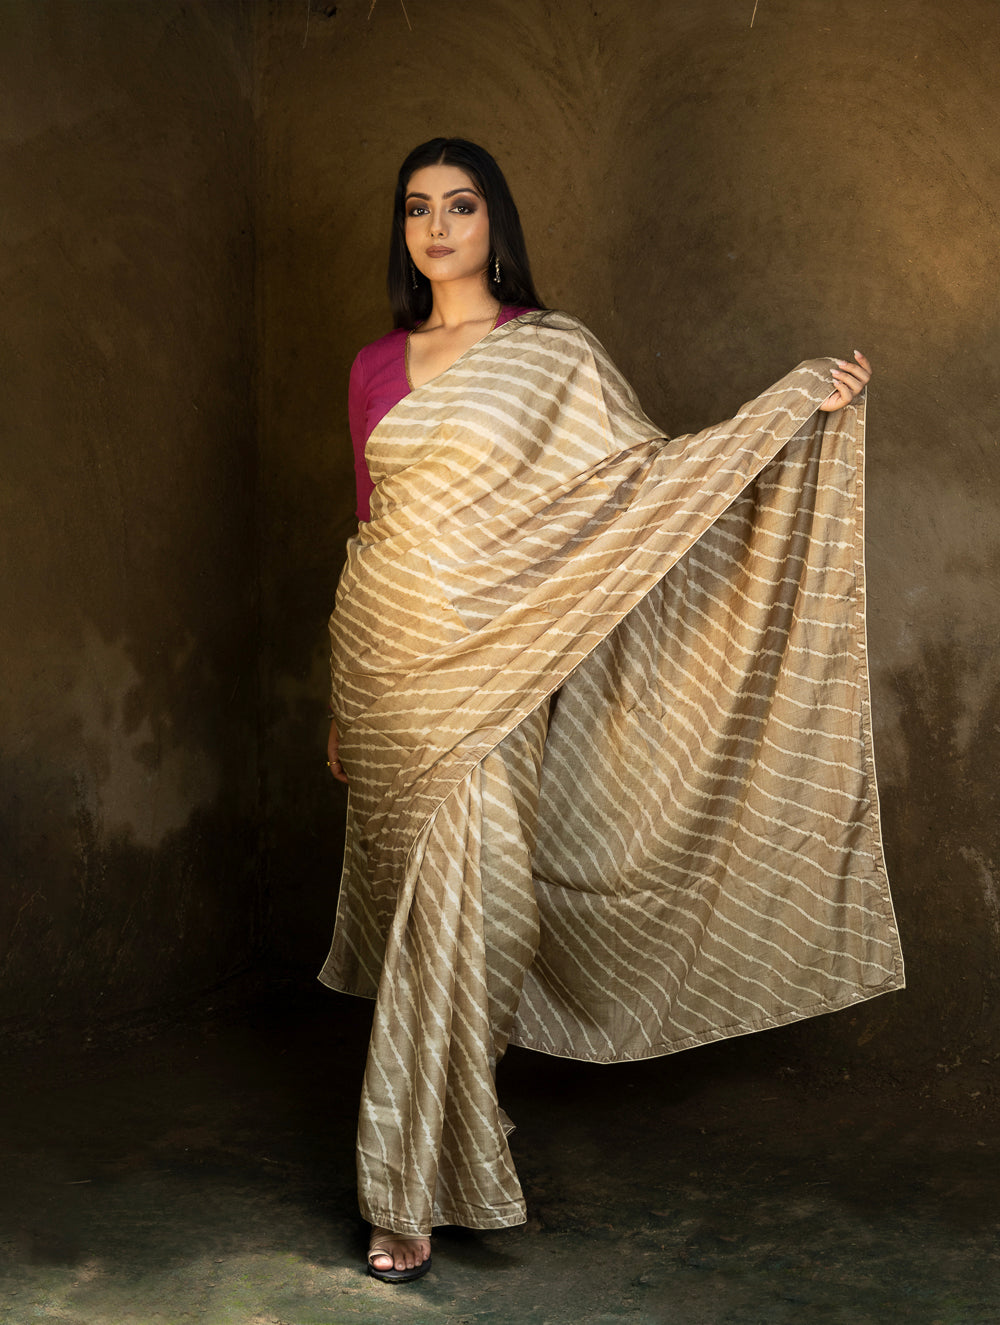 Load image into Gallery viewer, Striped Elegance. Hand Dyed Lehariya Tussore Silk Saree - Beige &amp; Pale Olive